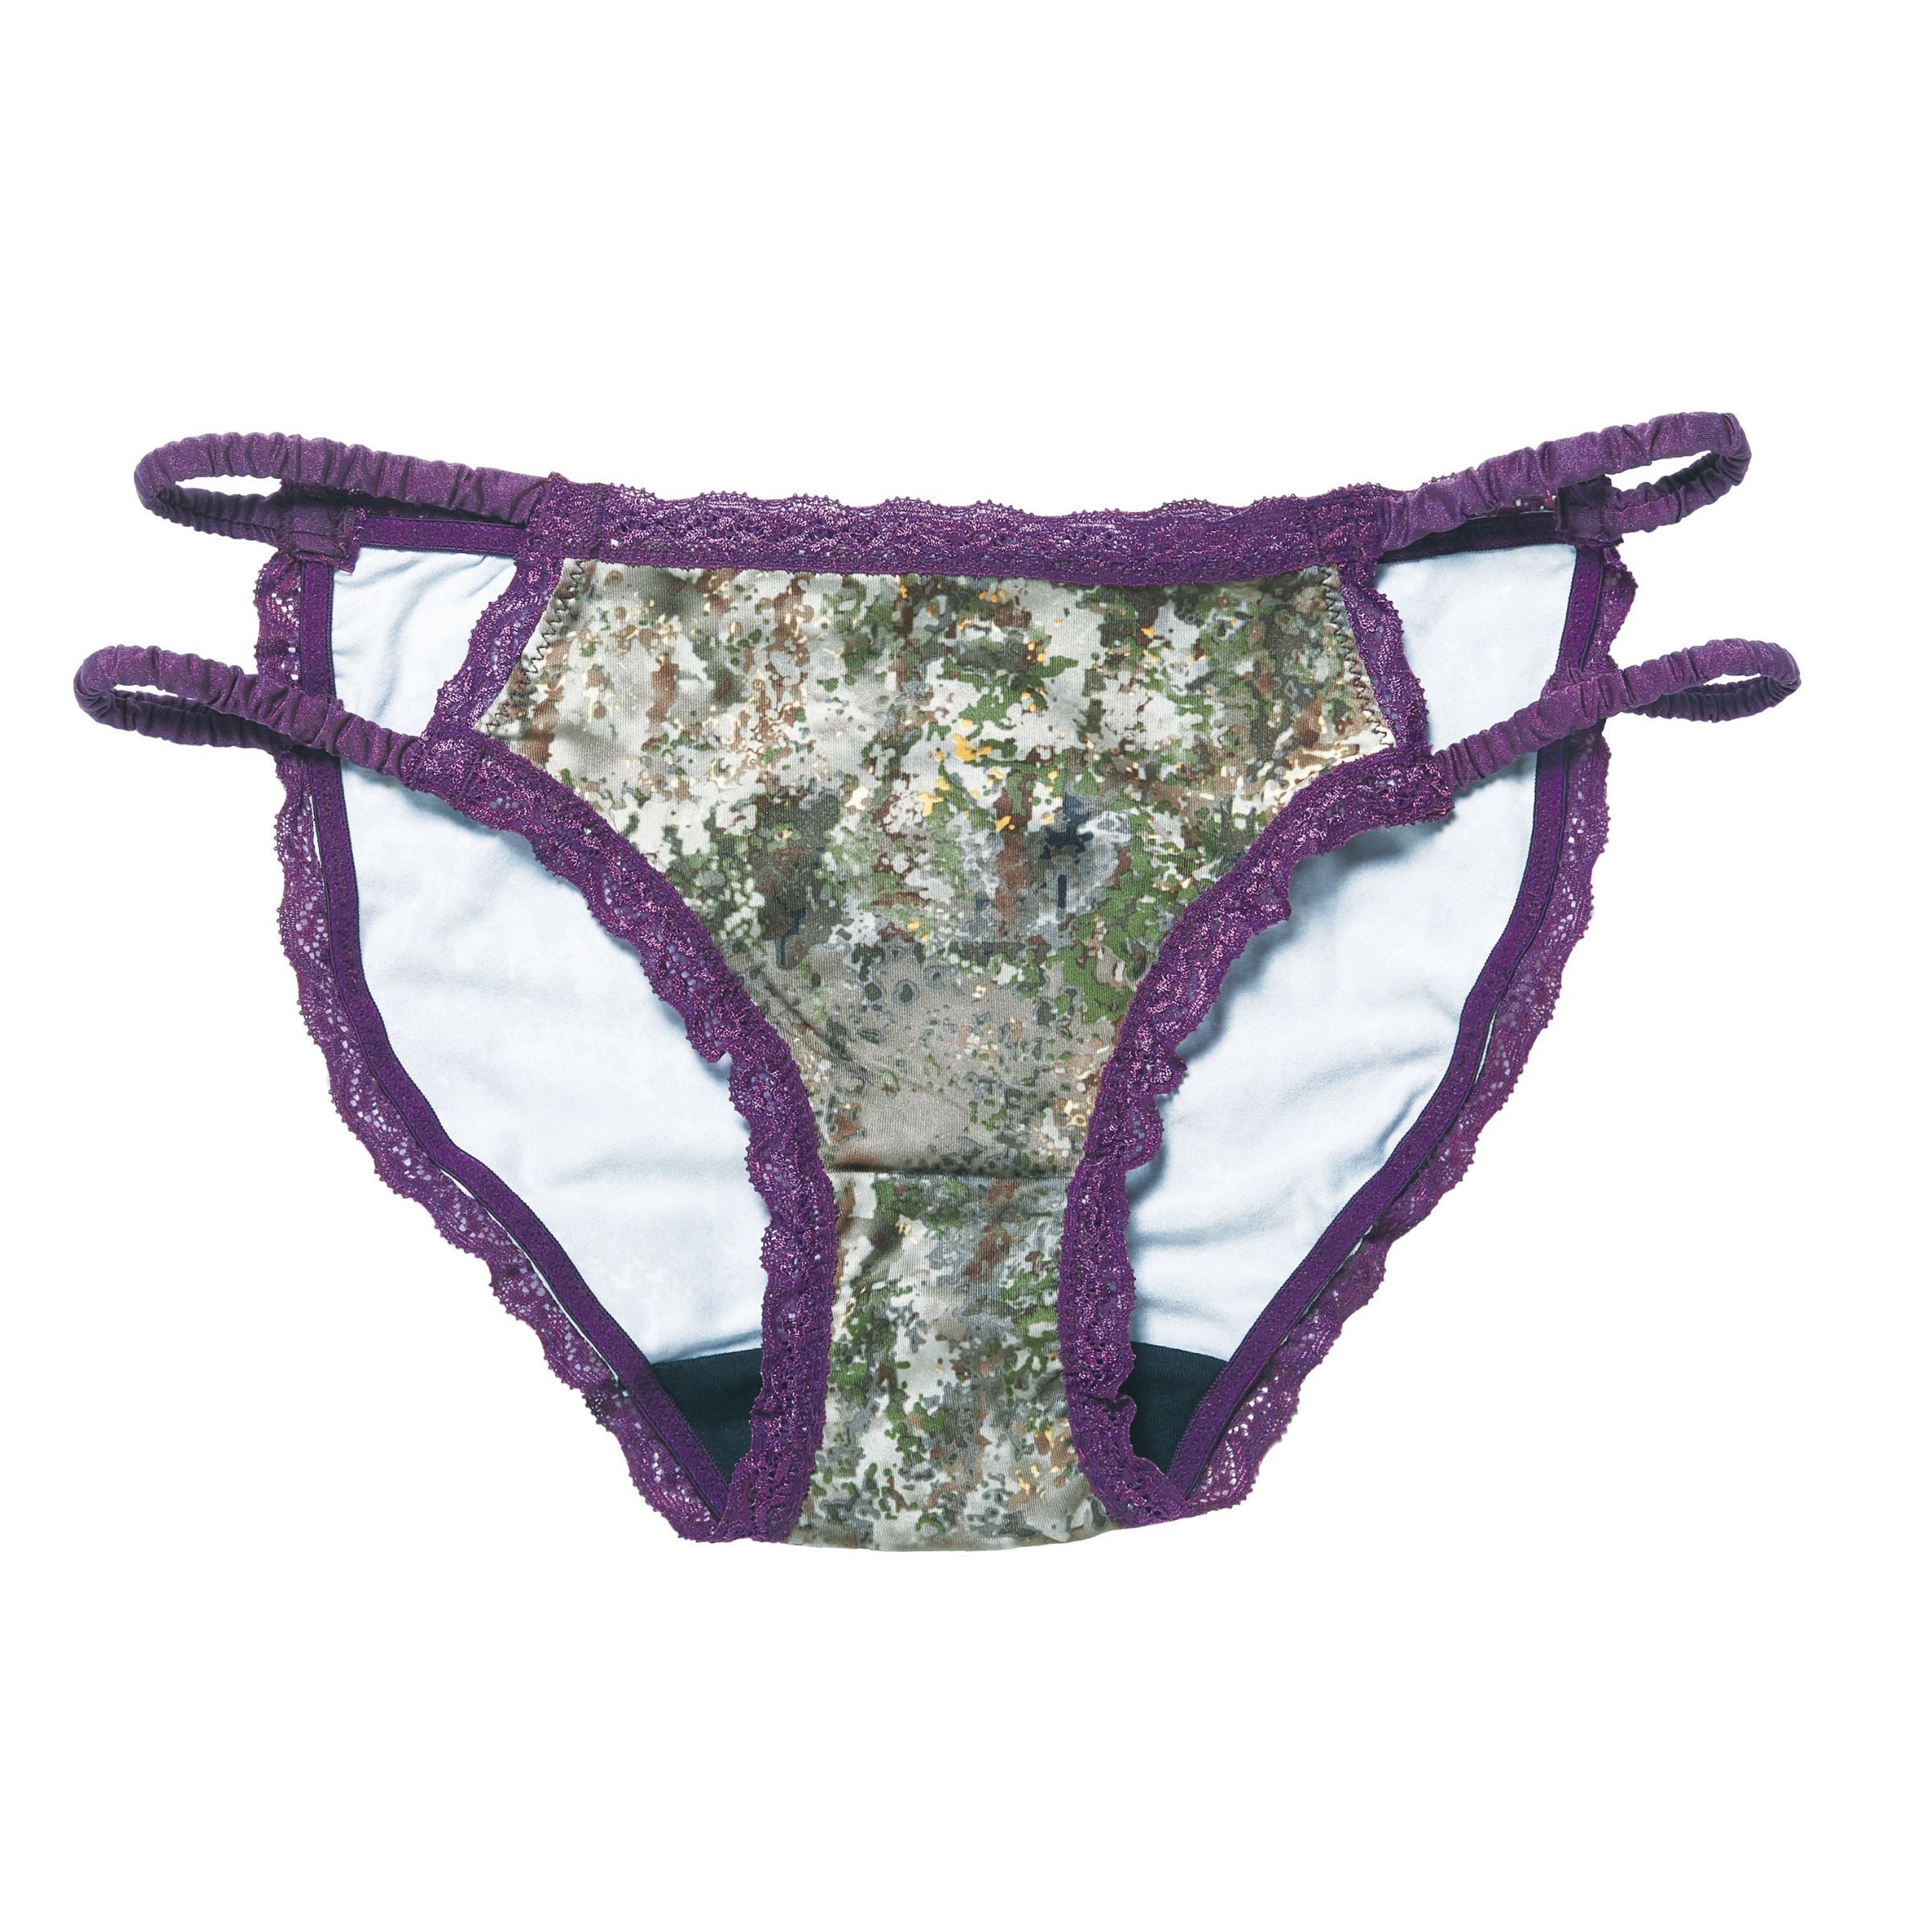 Turkish sexy purple lace panty underwear lingerie, Women's Fashion